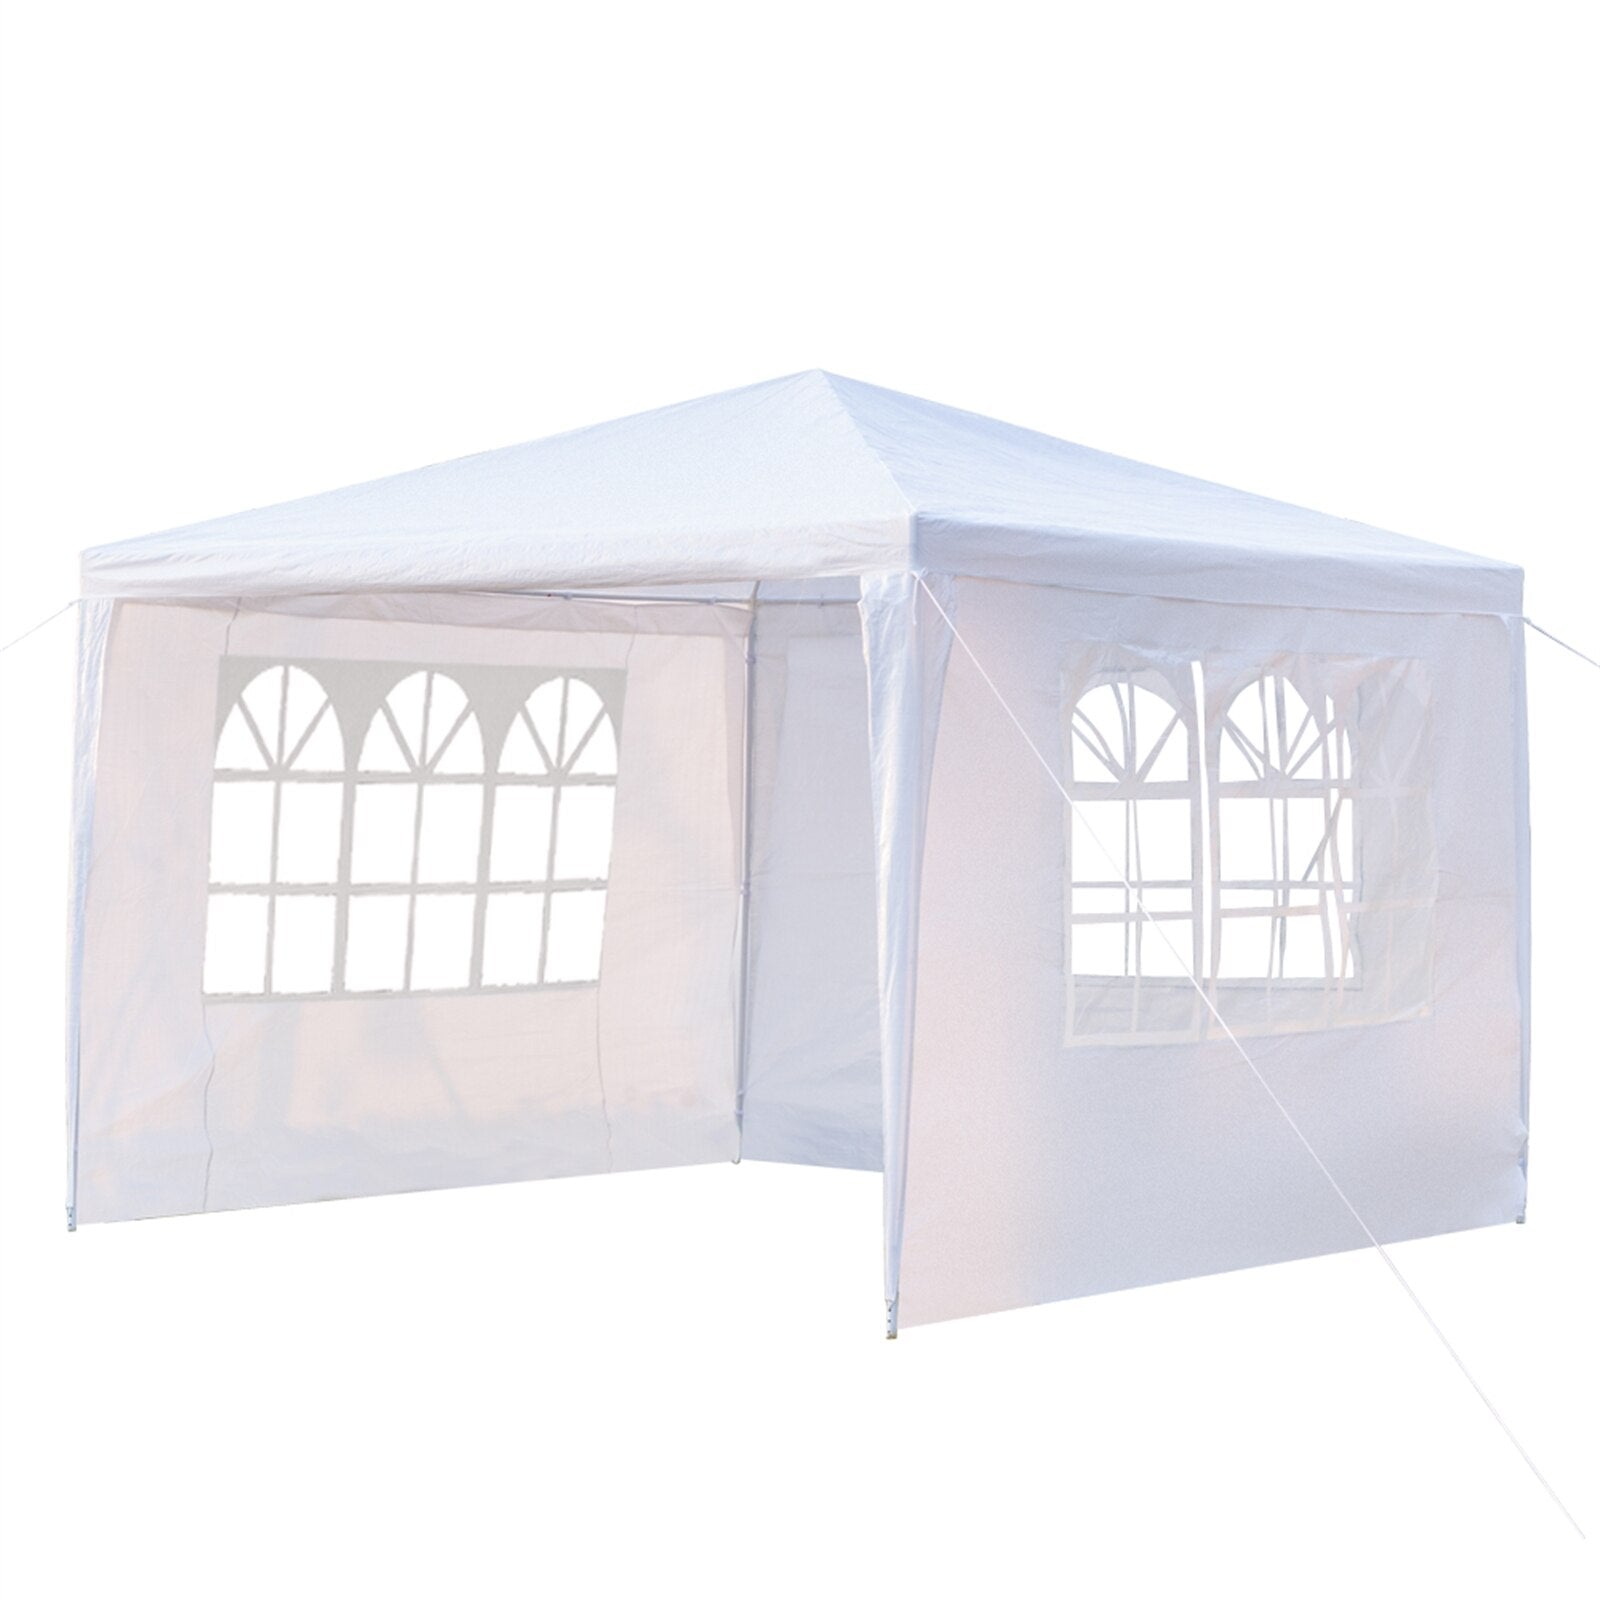 Portable Waterproof Tent